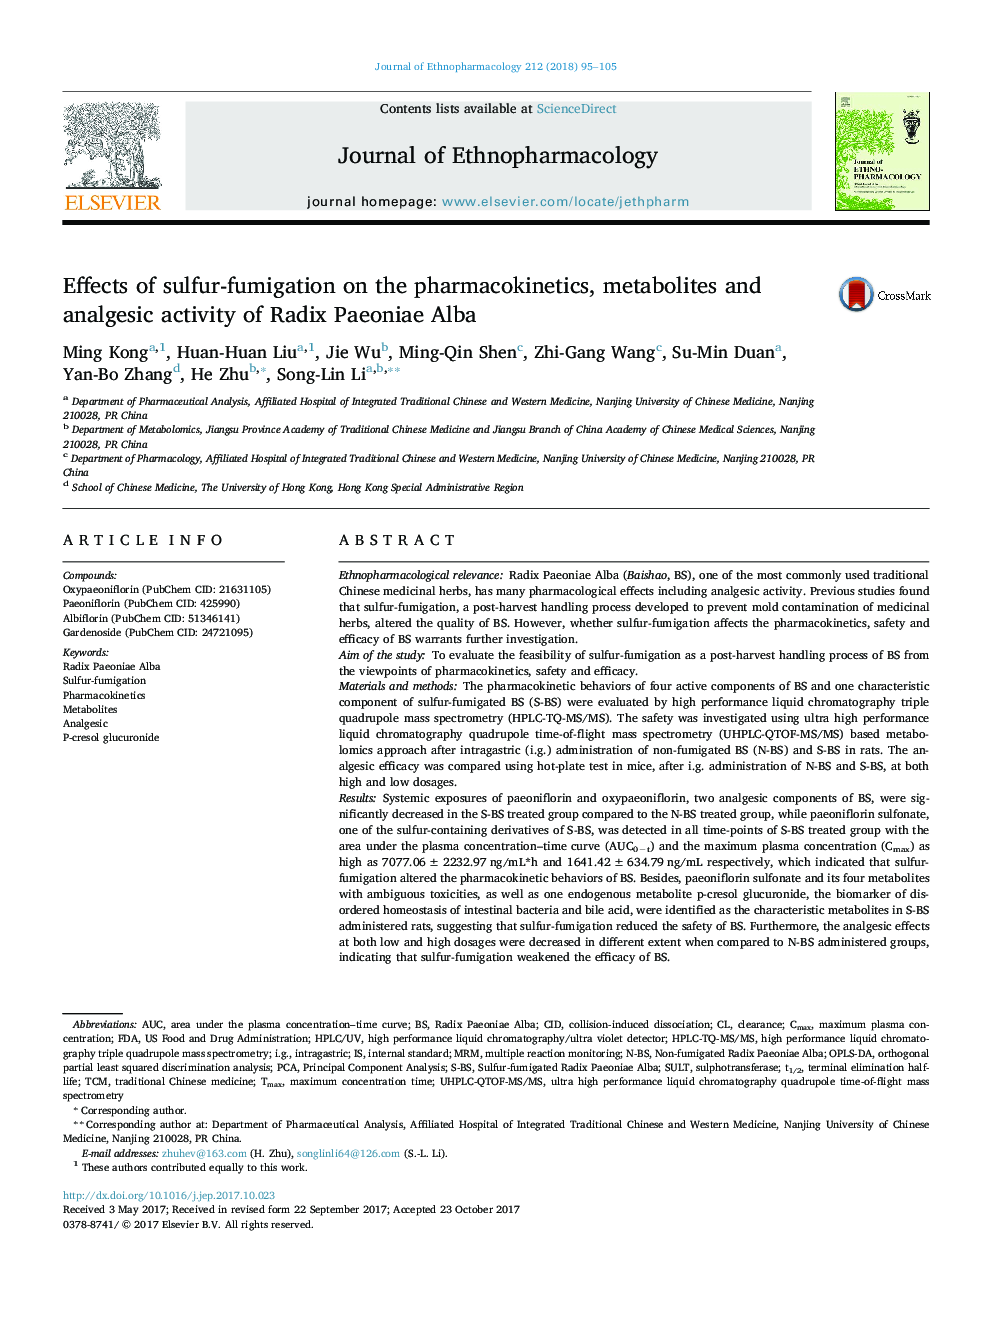 Effects of sulfur-fumigation on the pharmacokinetics, metabolites and analgesic activity of Radix Paeoniae Alba